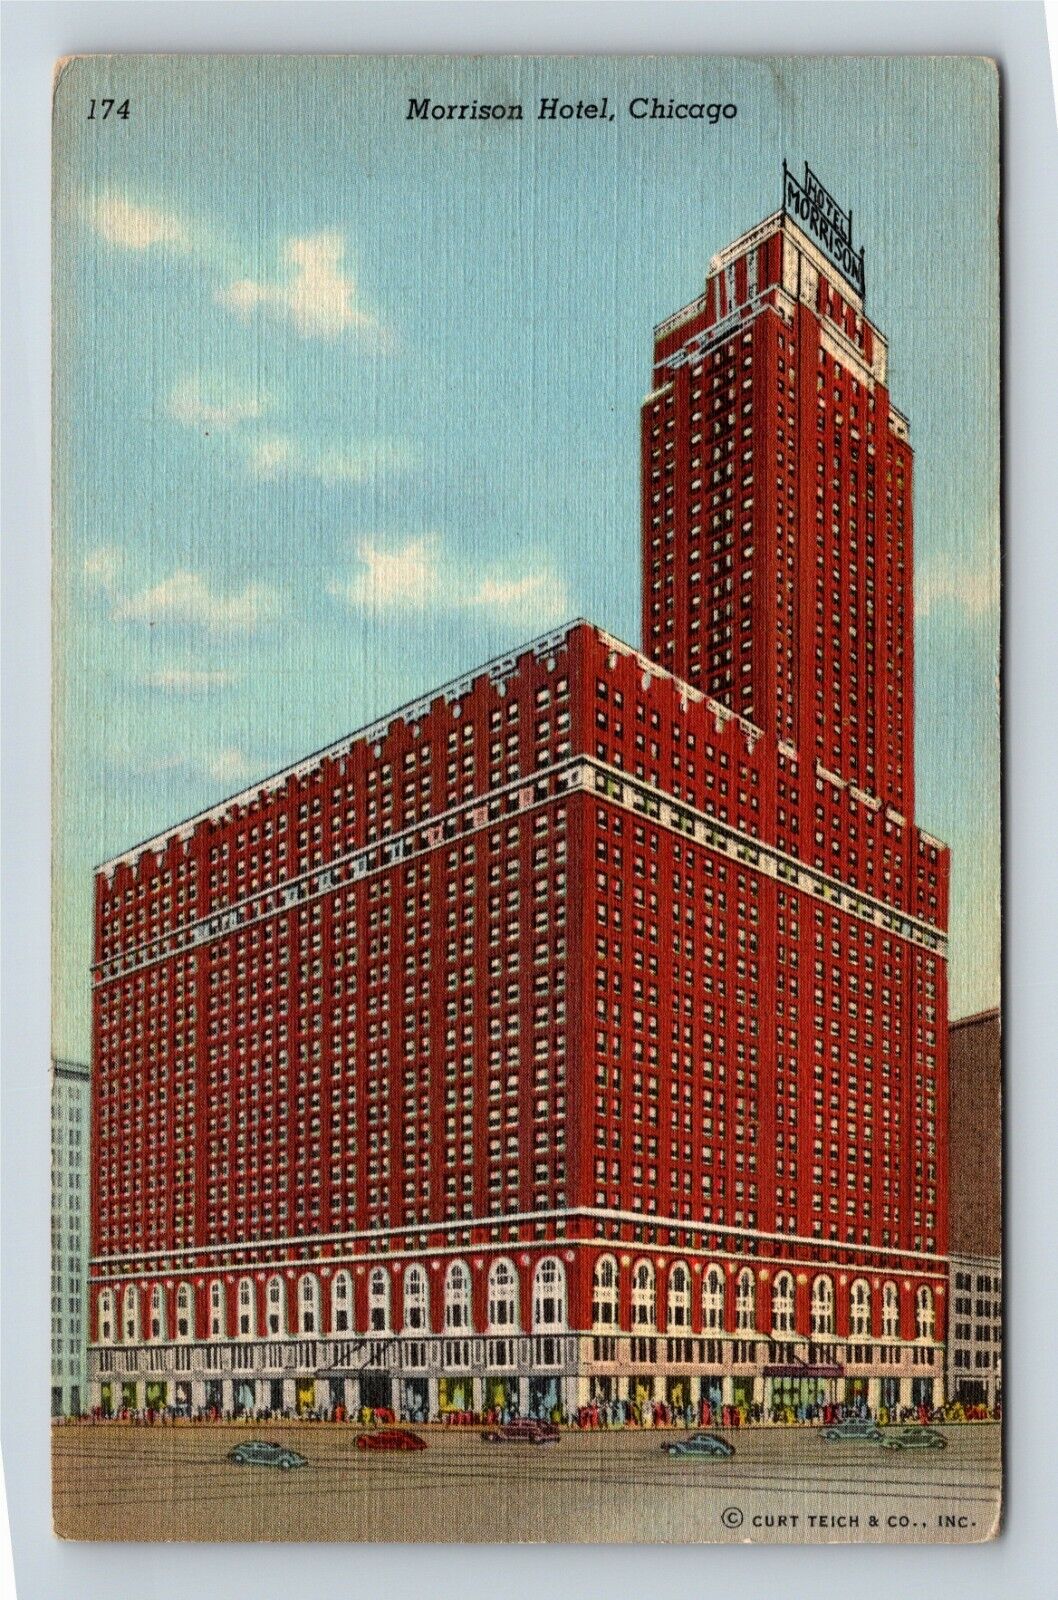 Chicago IL, Historic Hotel Morrison, Shops, Tower, Illinois Vintage Postcard